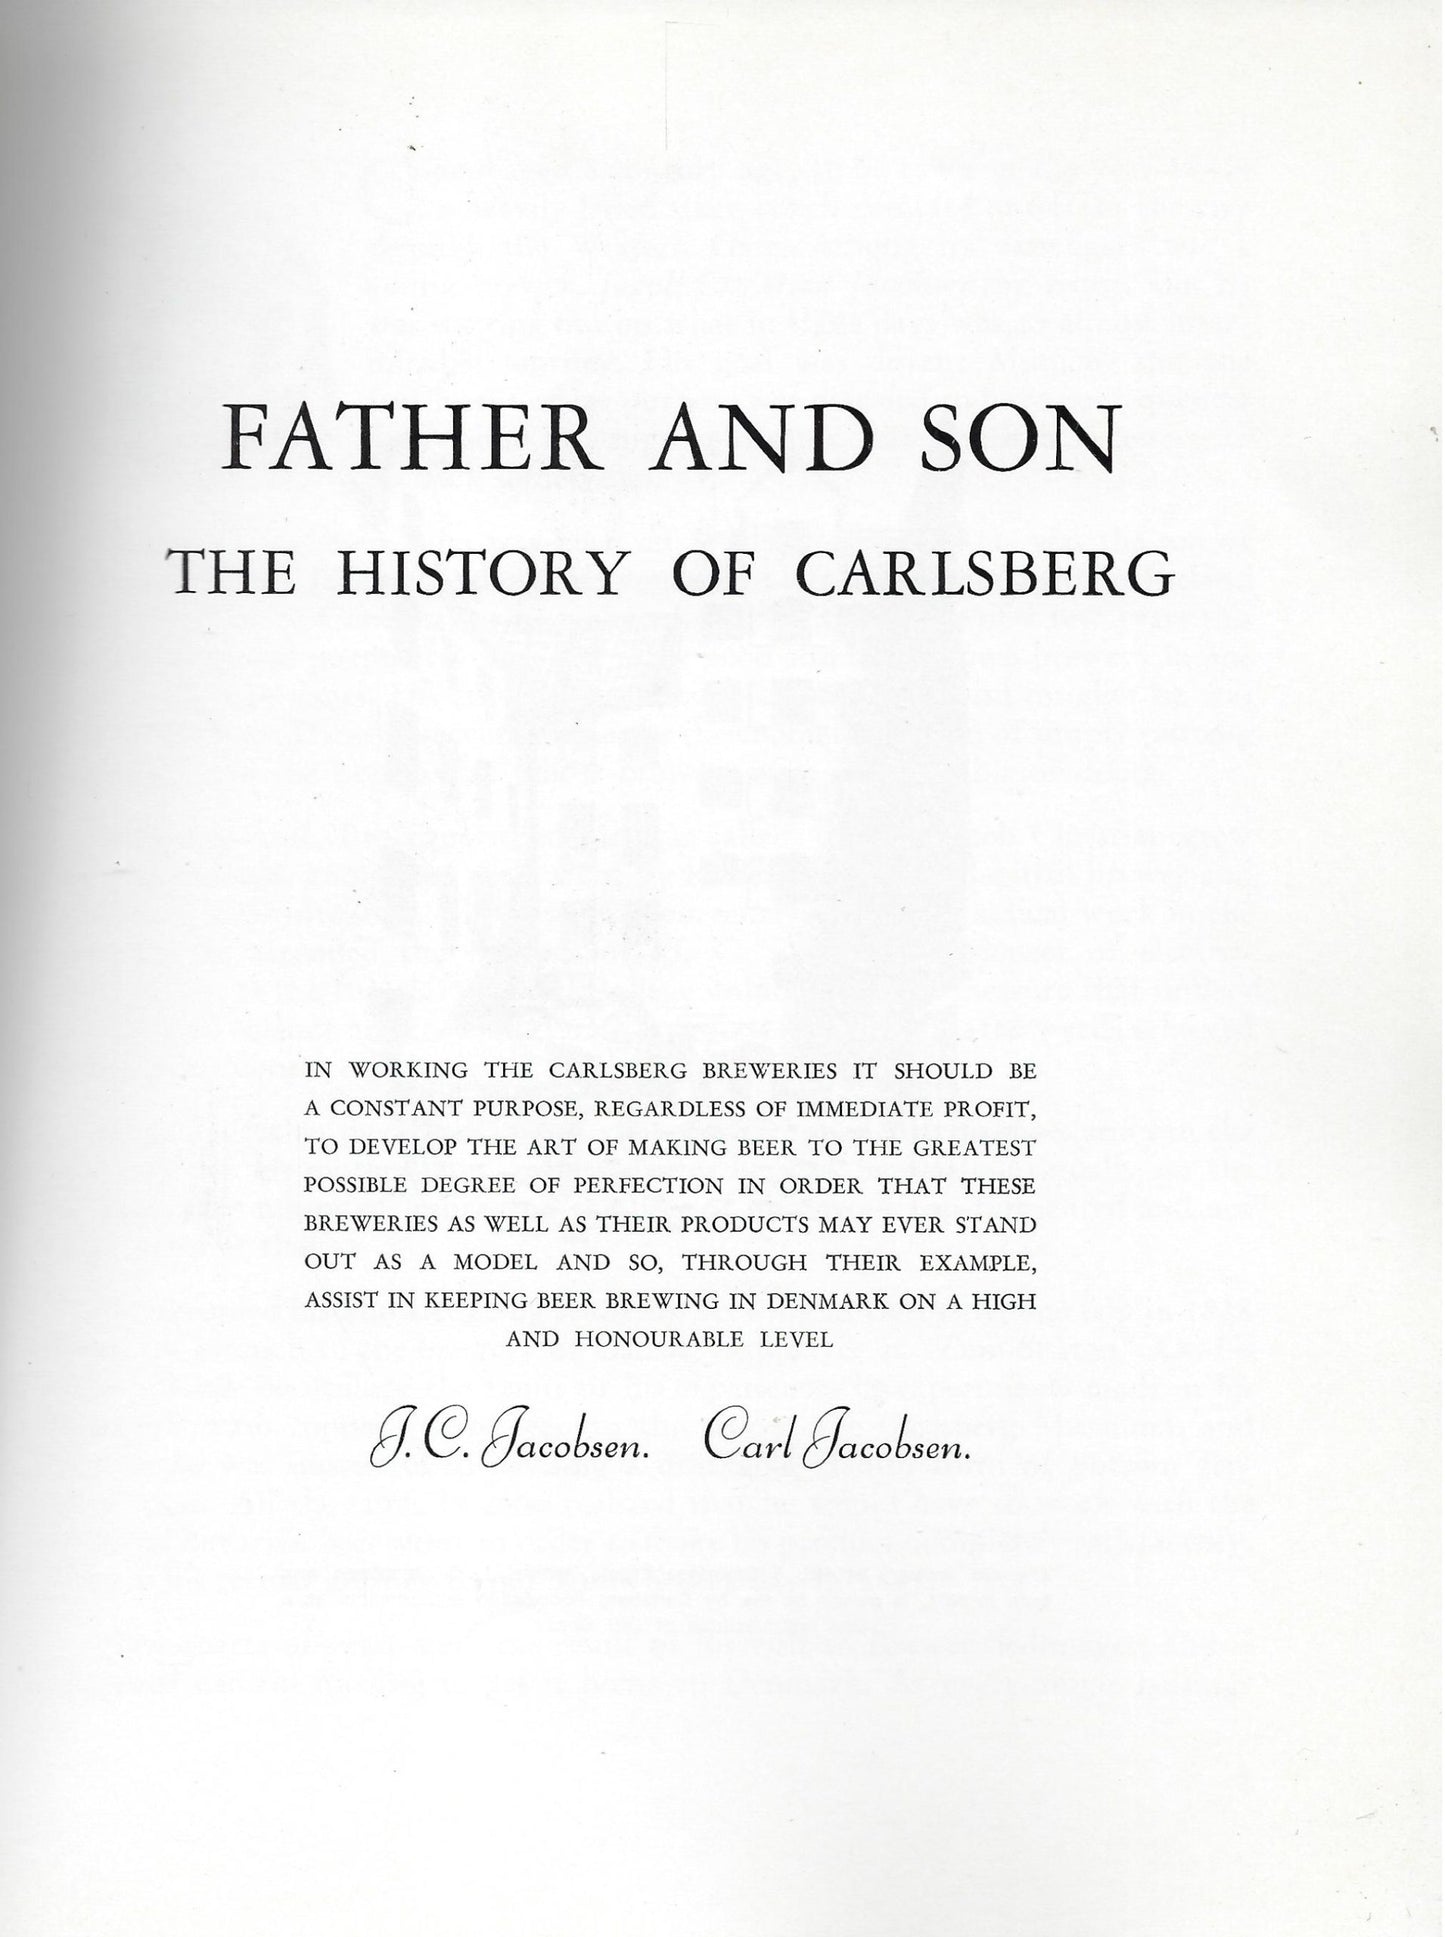 The book of Carlsberg